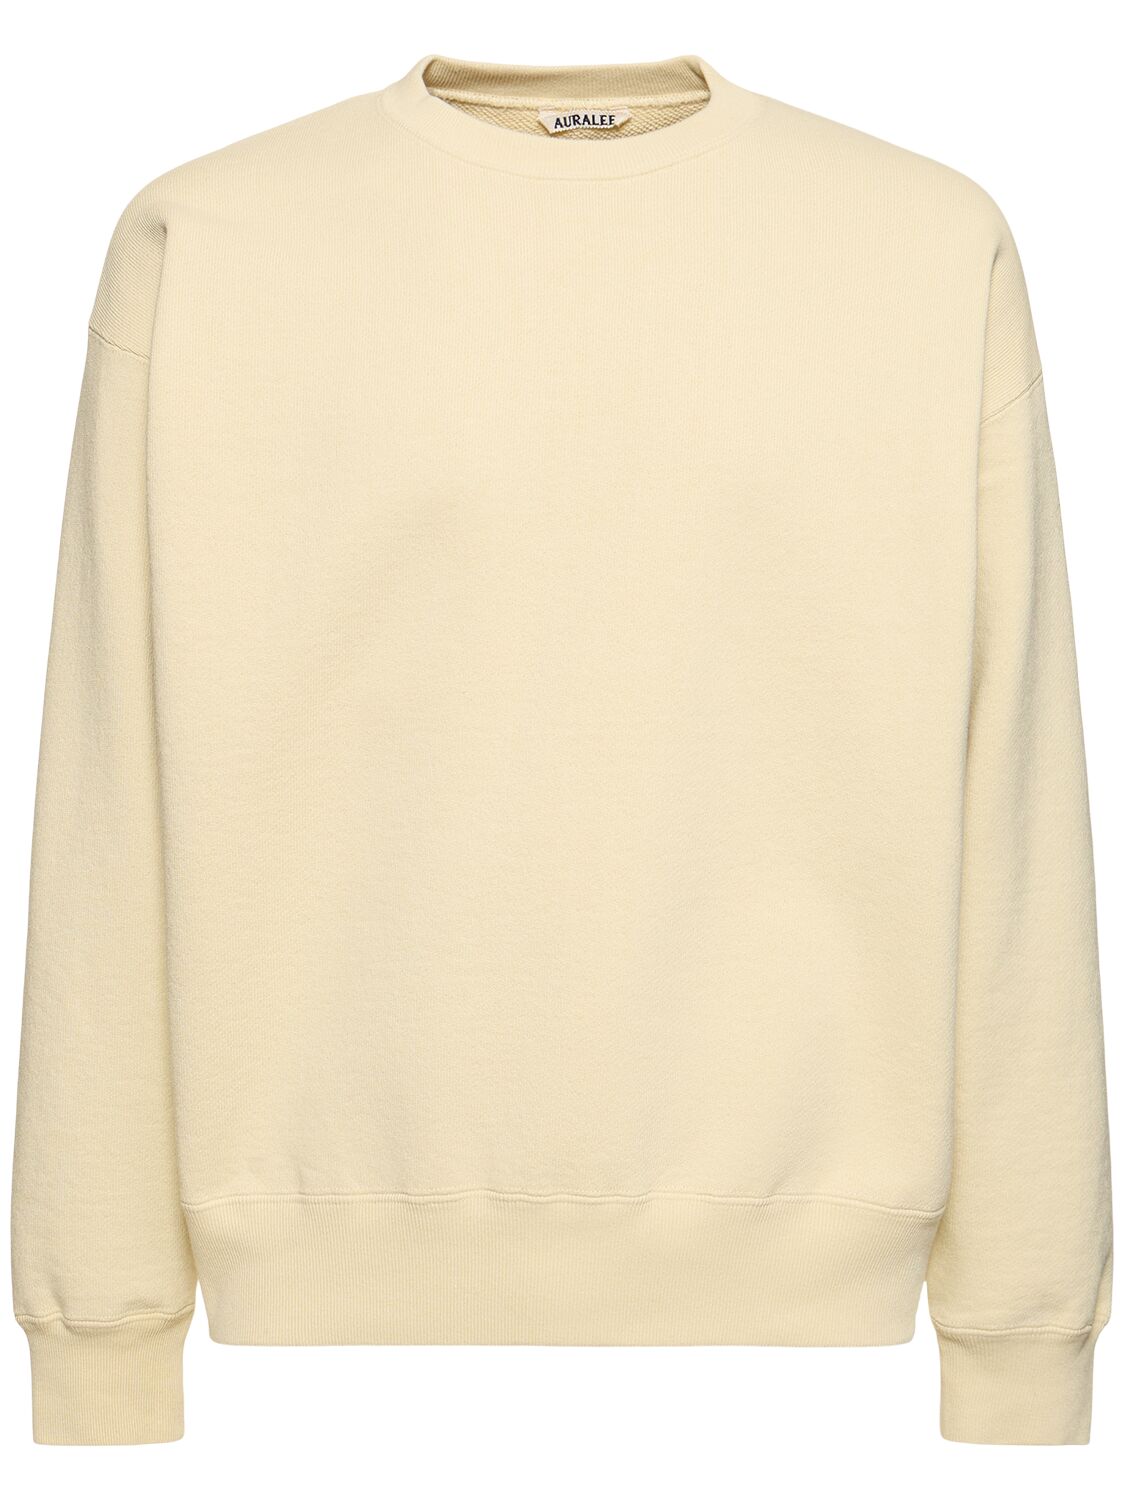 Image of Cotton Knit Sweatshirt